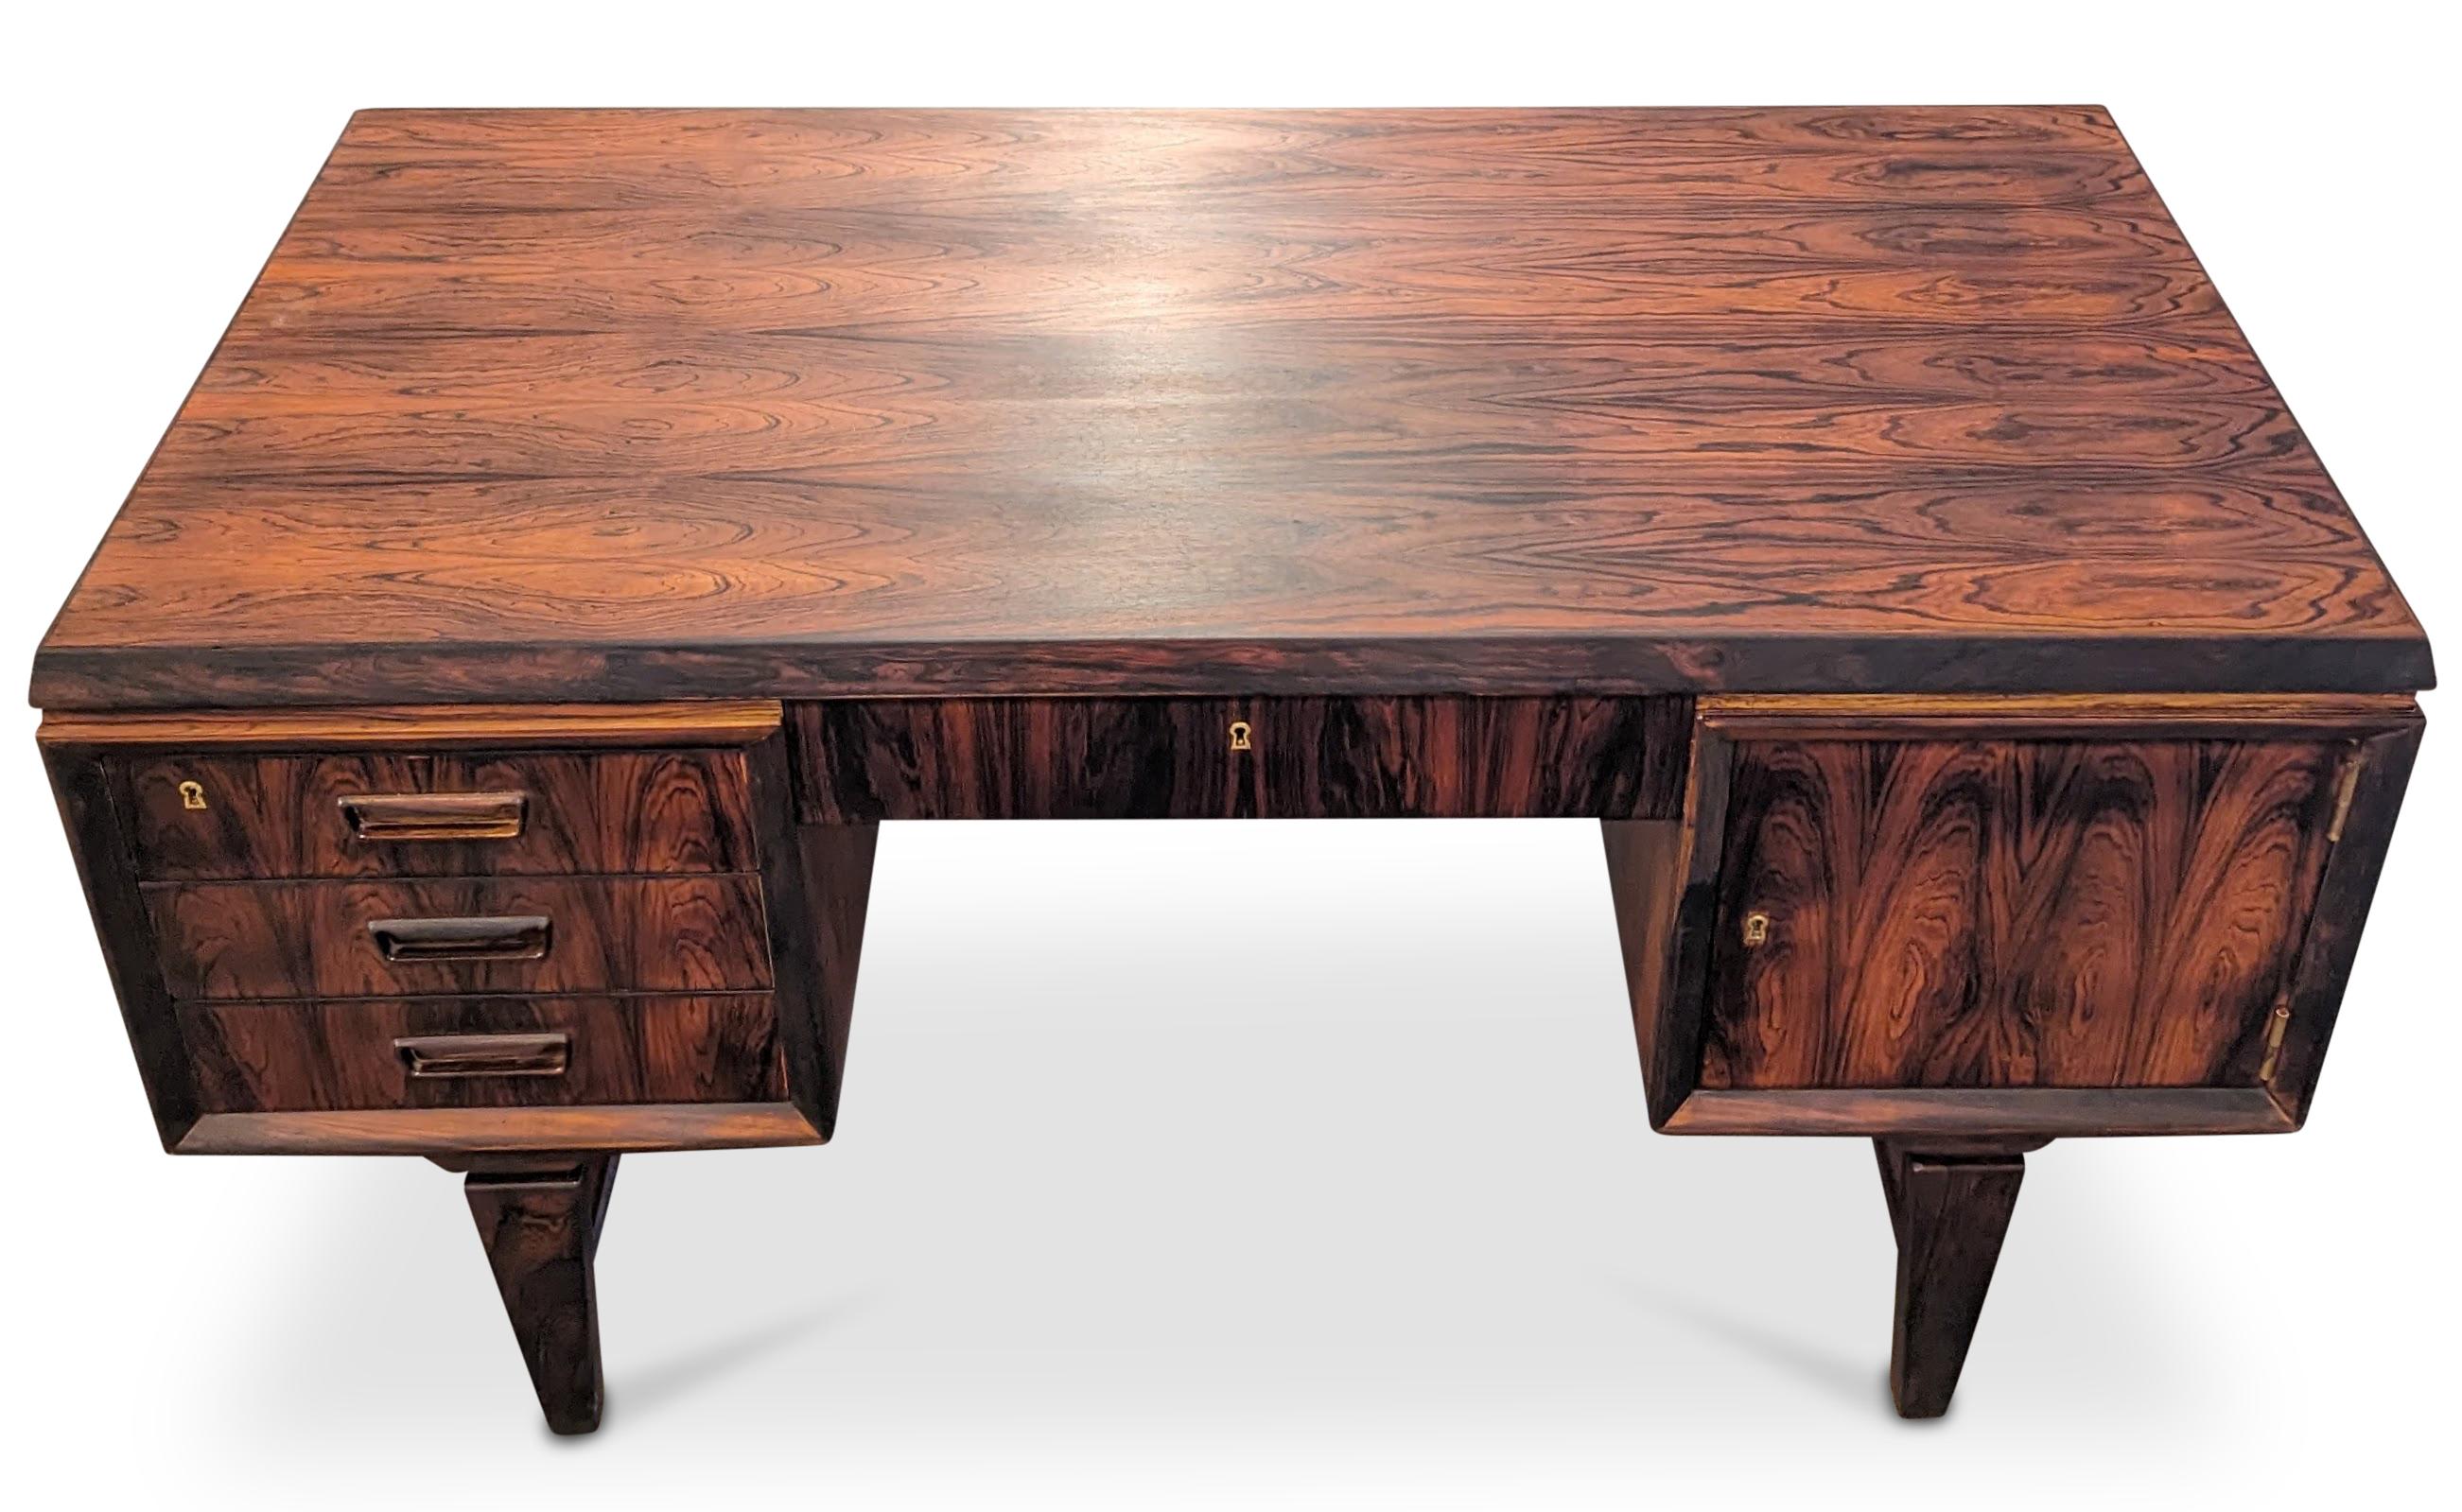 Vintage Danish Mid Century Large Rosewood Desk - 072315 For Sale 1